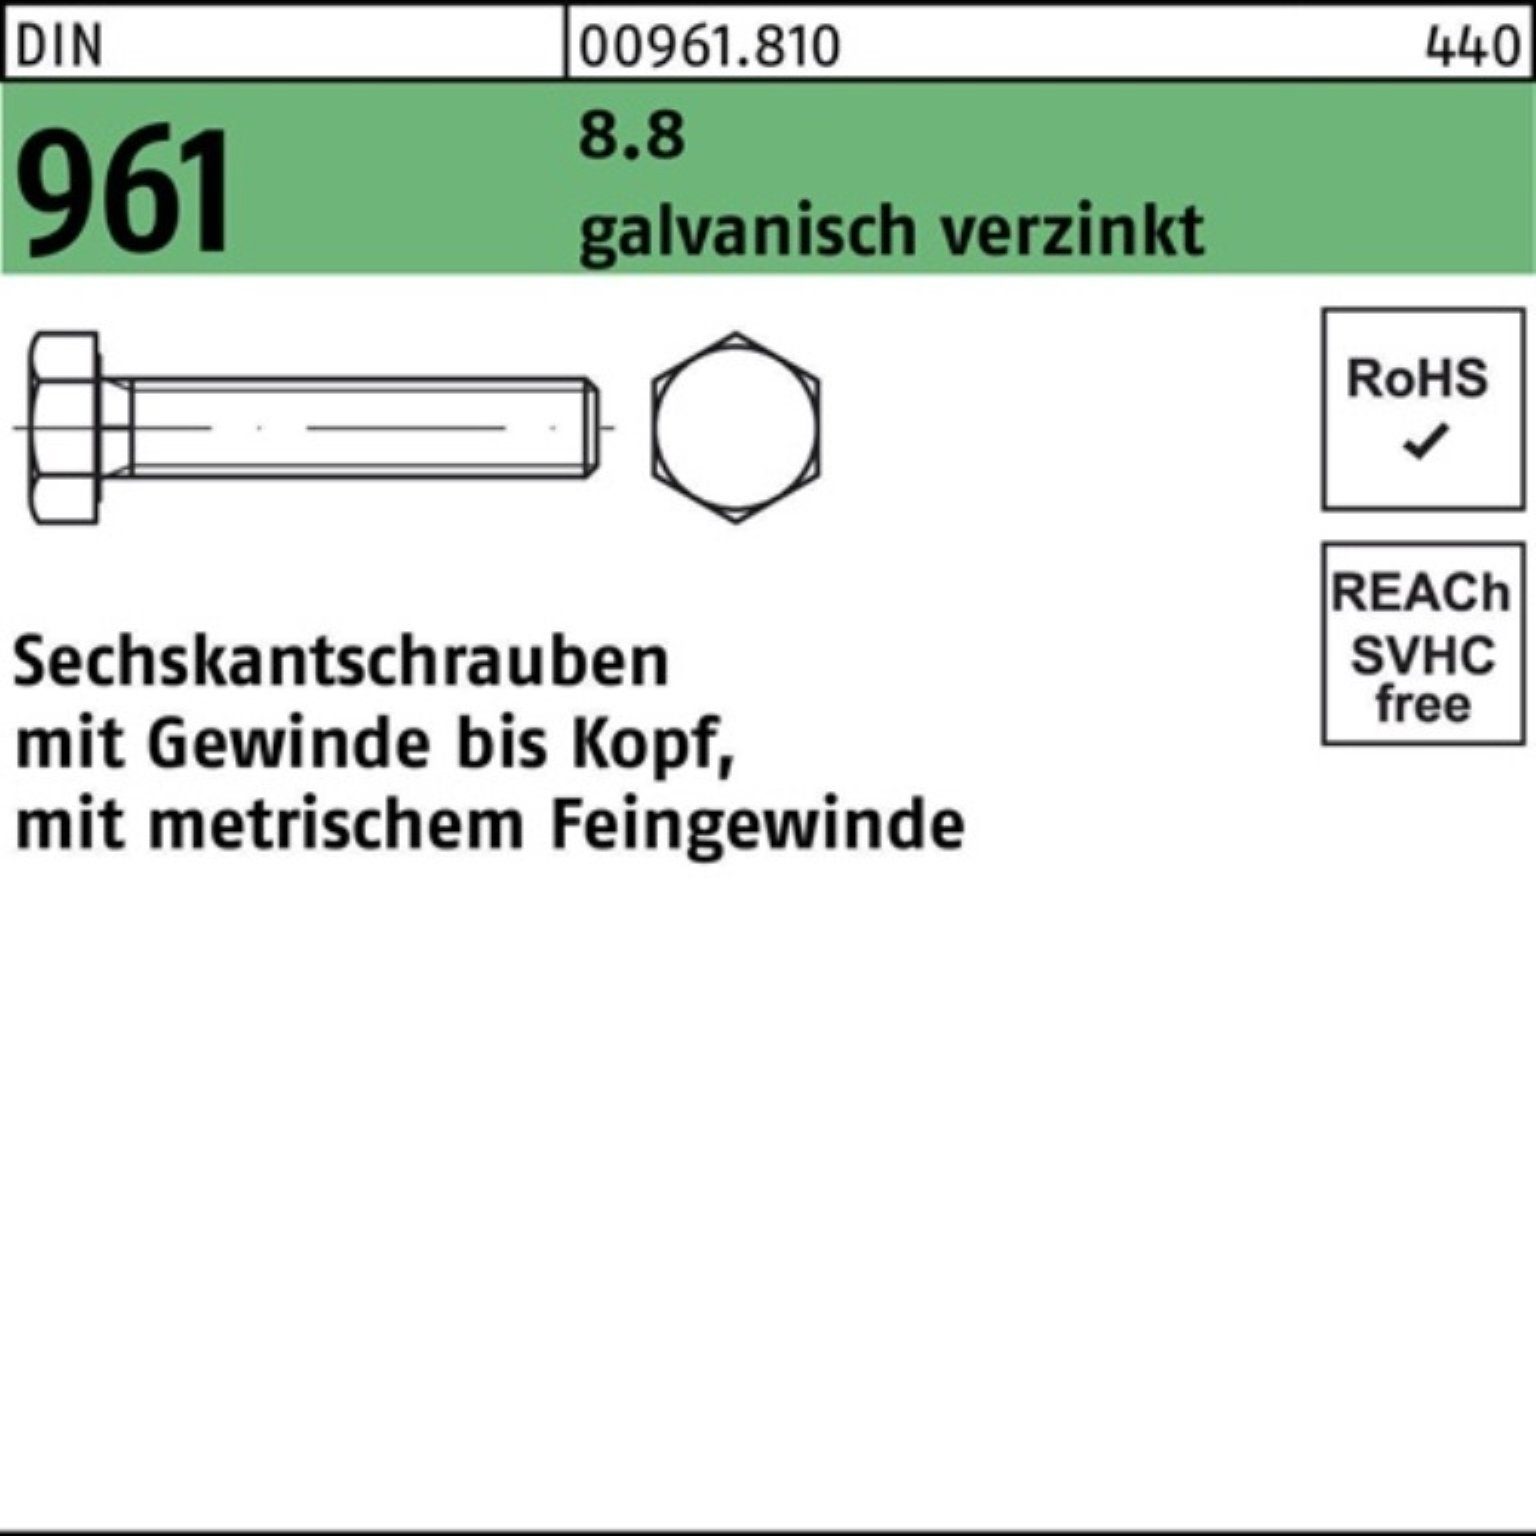 Pack Reyher Sechskantschraube Sechskantschraube 961 100 8.8 galv.verz. VG M14x1,5x 40 DIN 100er